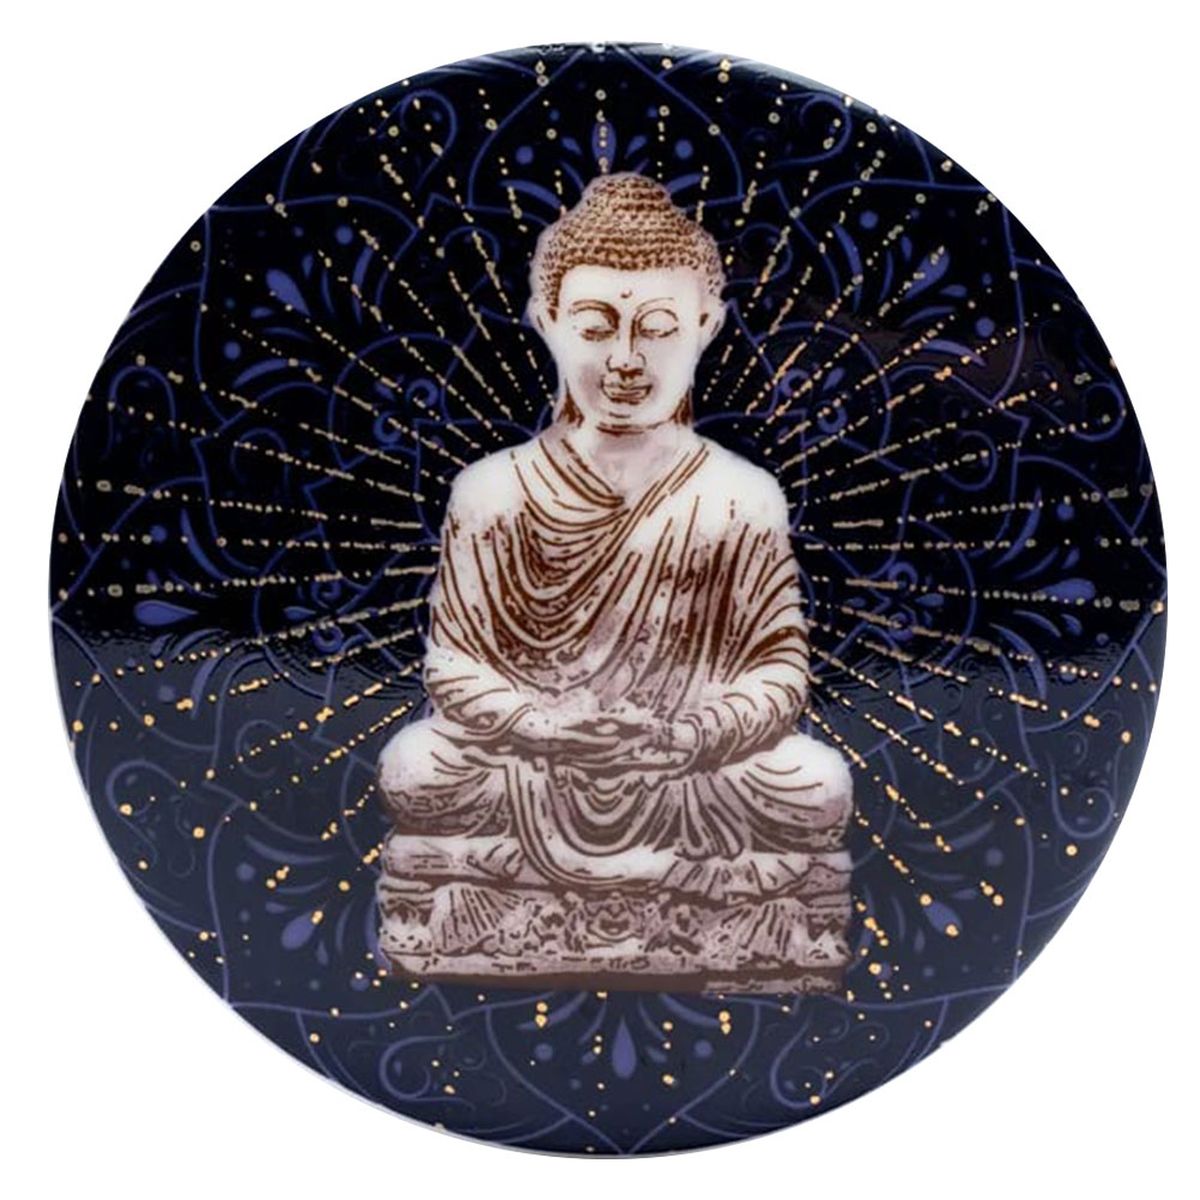 Mug avec infuseur mtal - Bouddha bleu Nuit